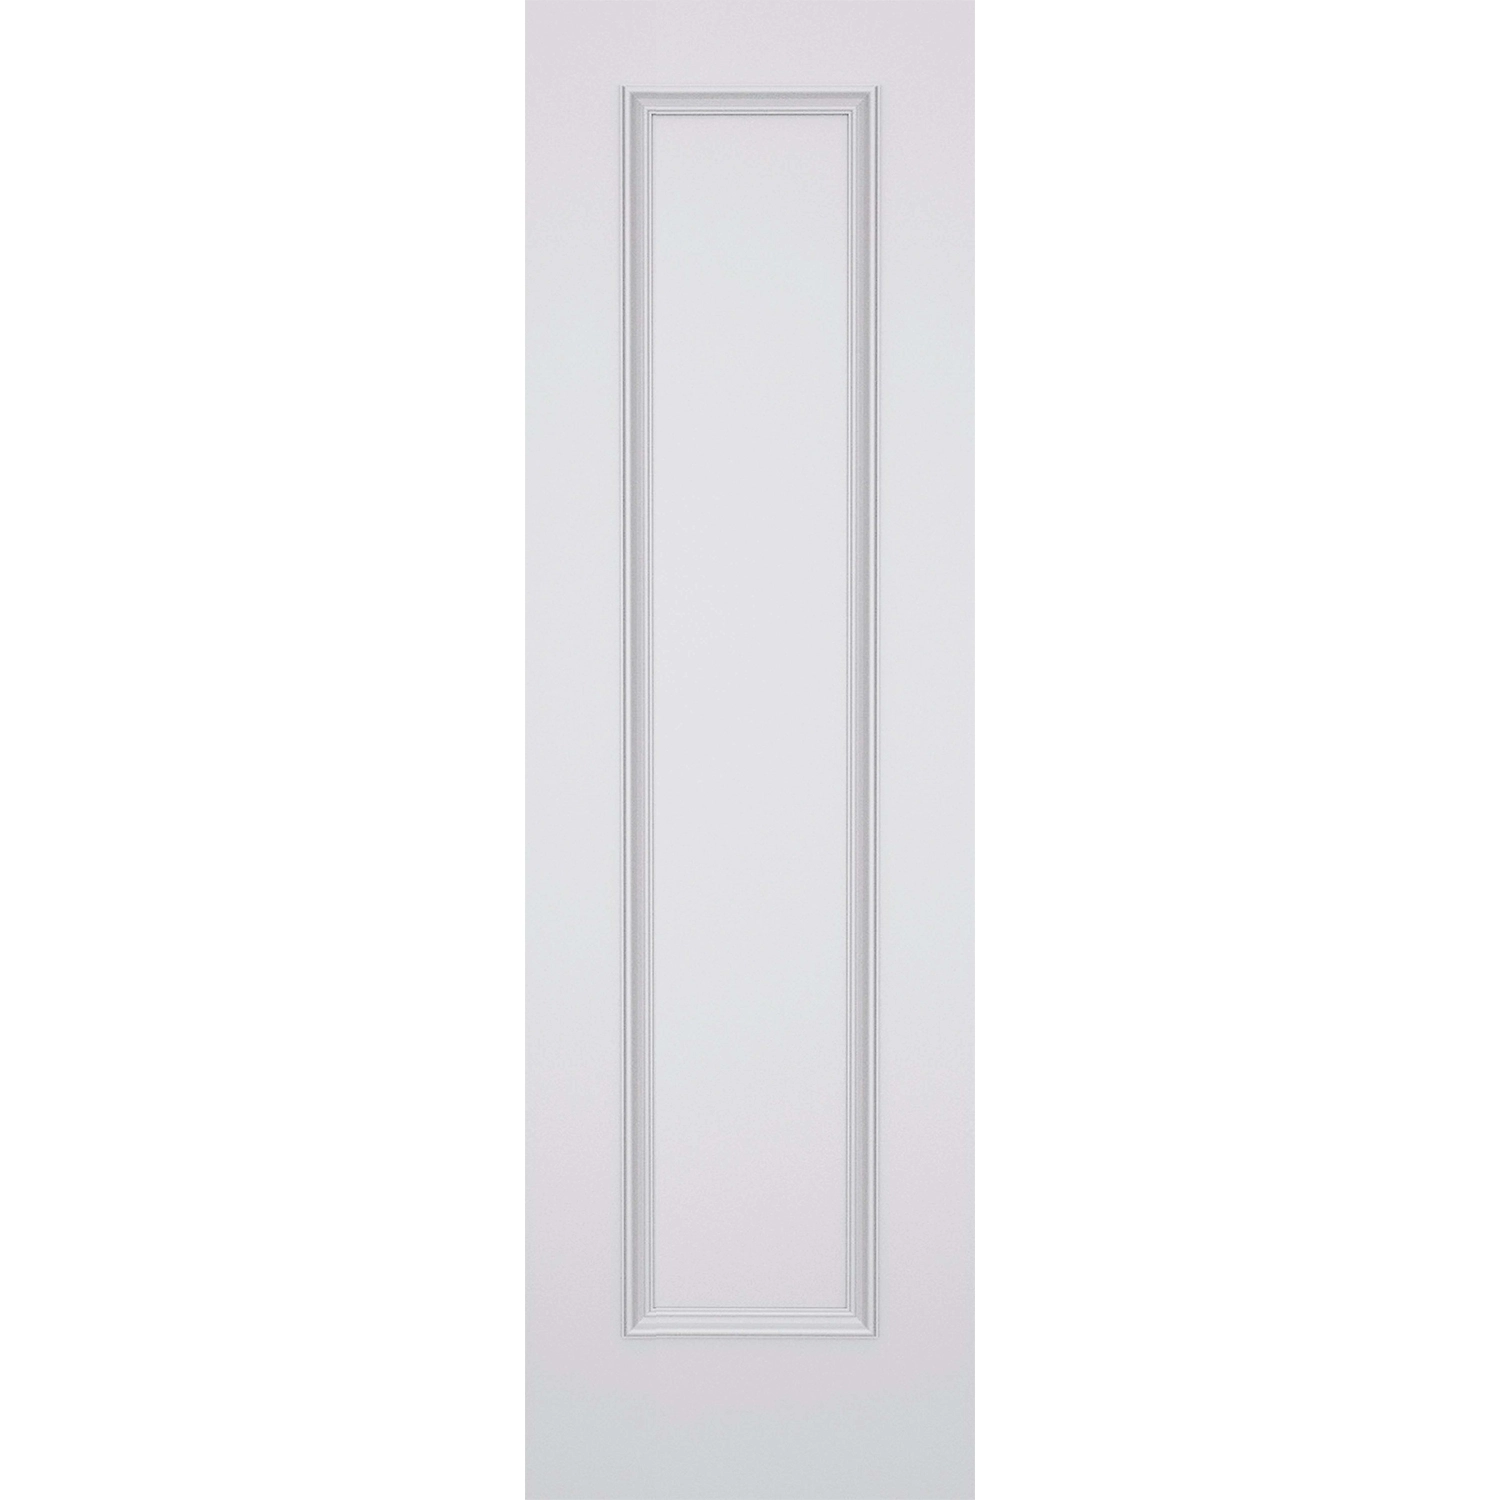 1 Panel 80 x 24 x 1-3/8 Smooth Hollow Door Raised